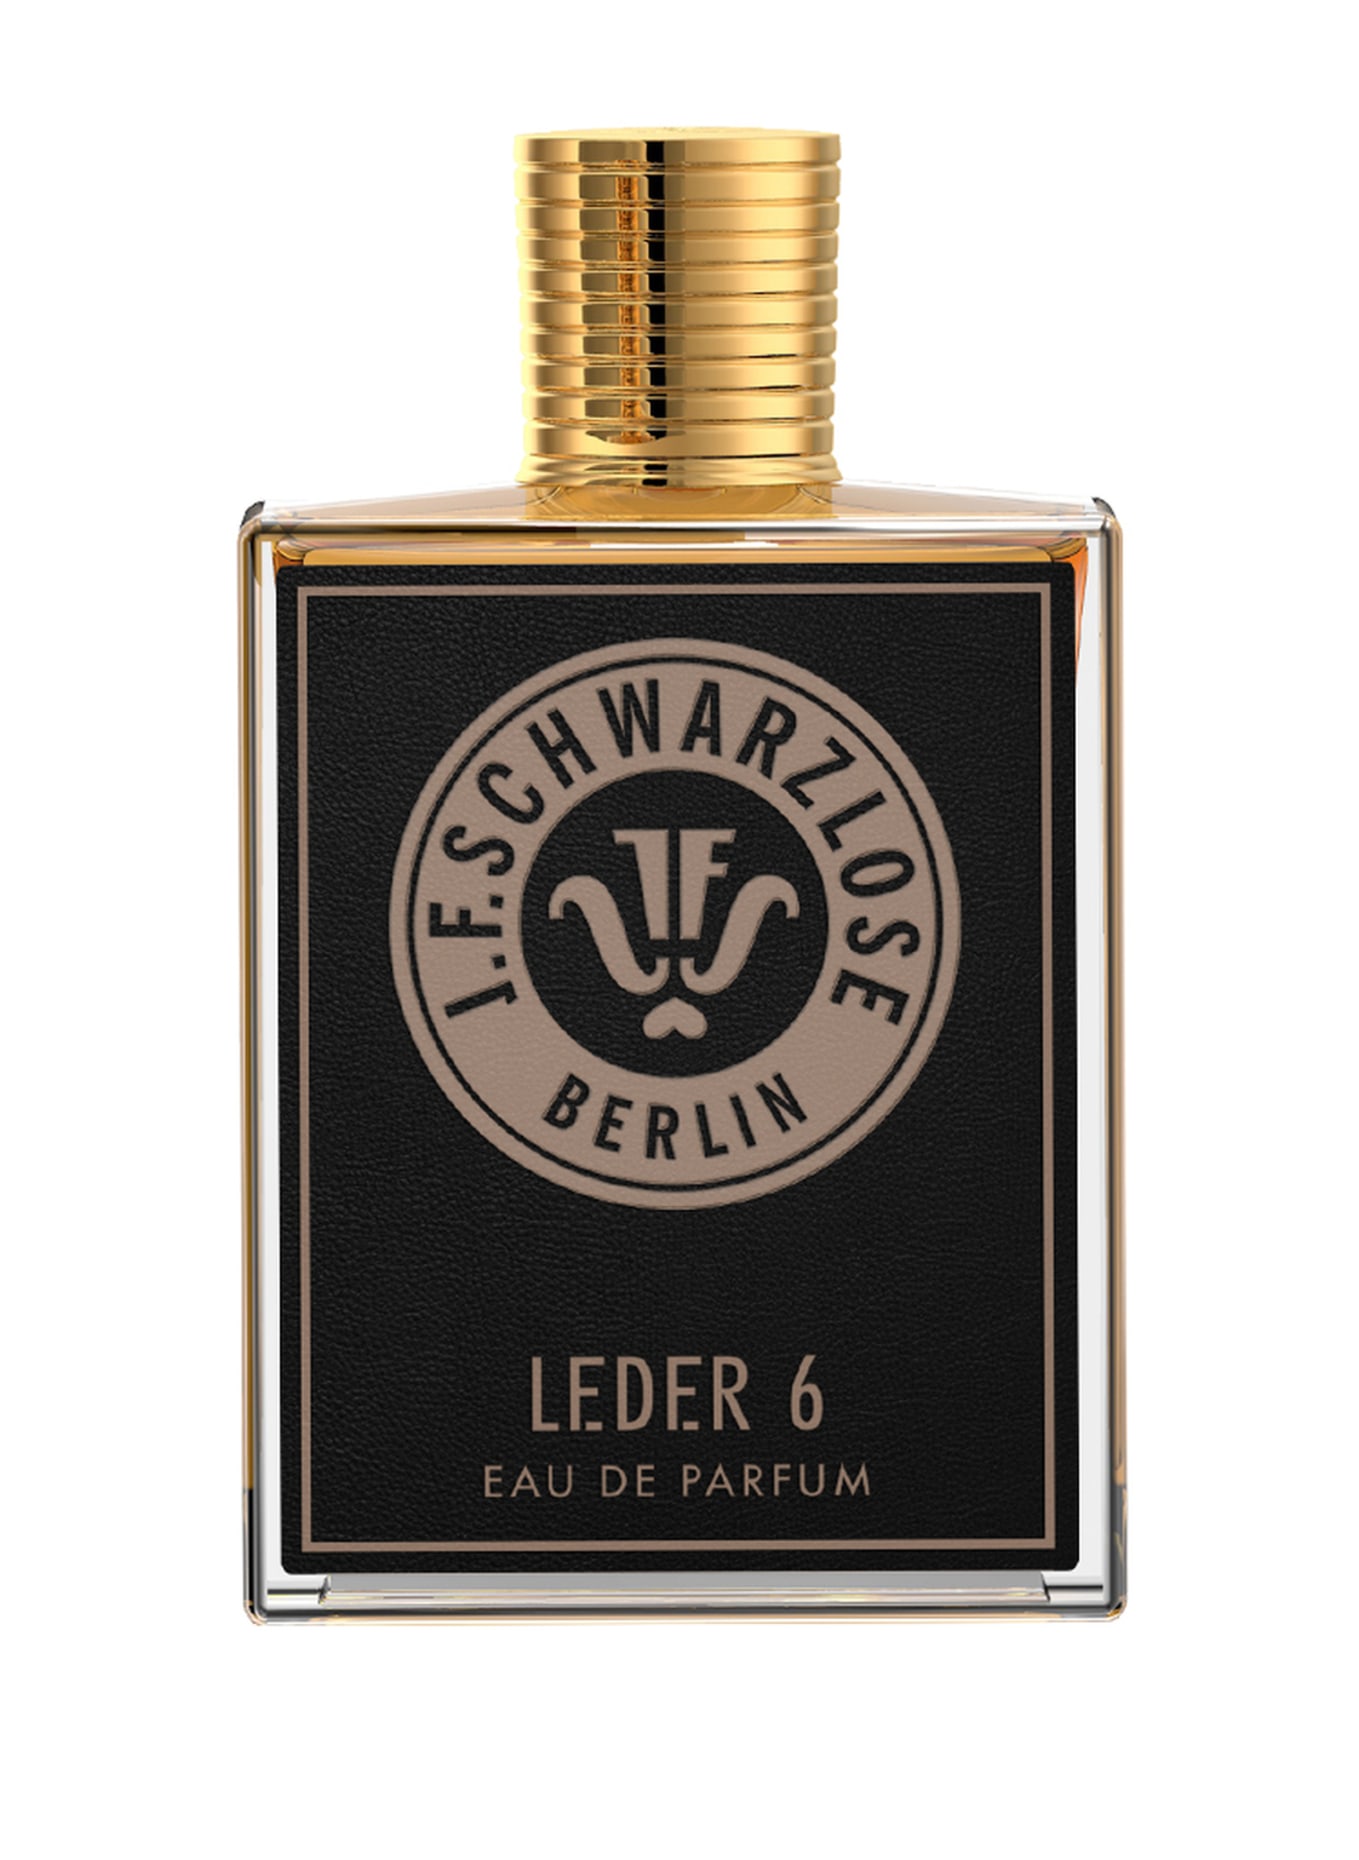 J.F. SCHWARZLOSE BERLIN LEDER 6 (Bild 1)